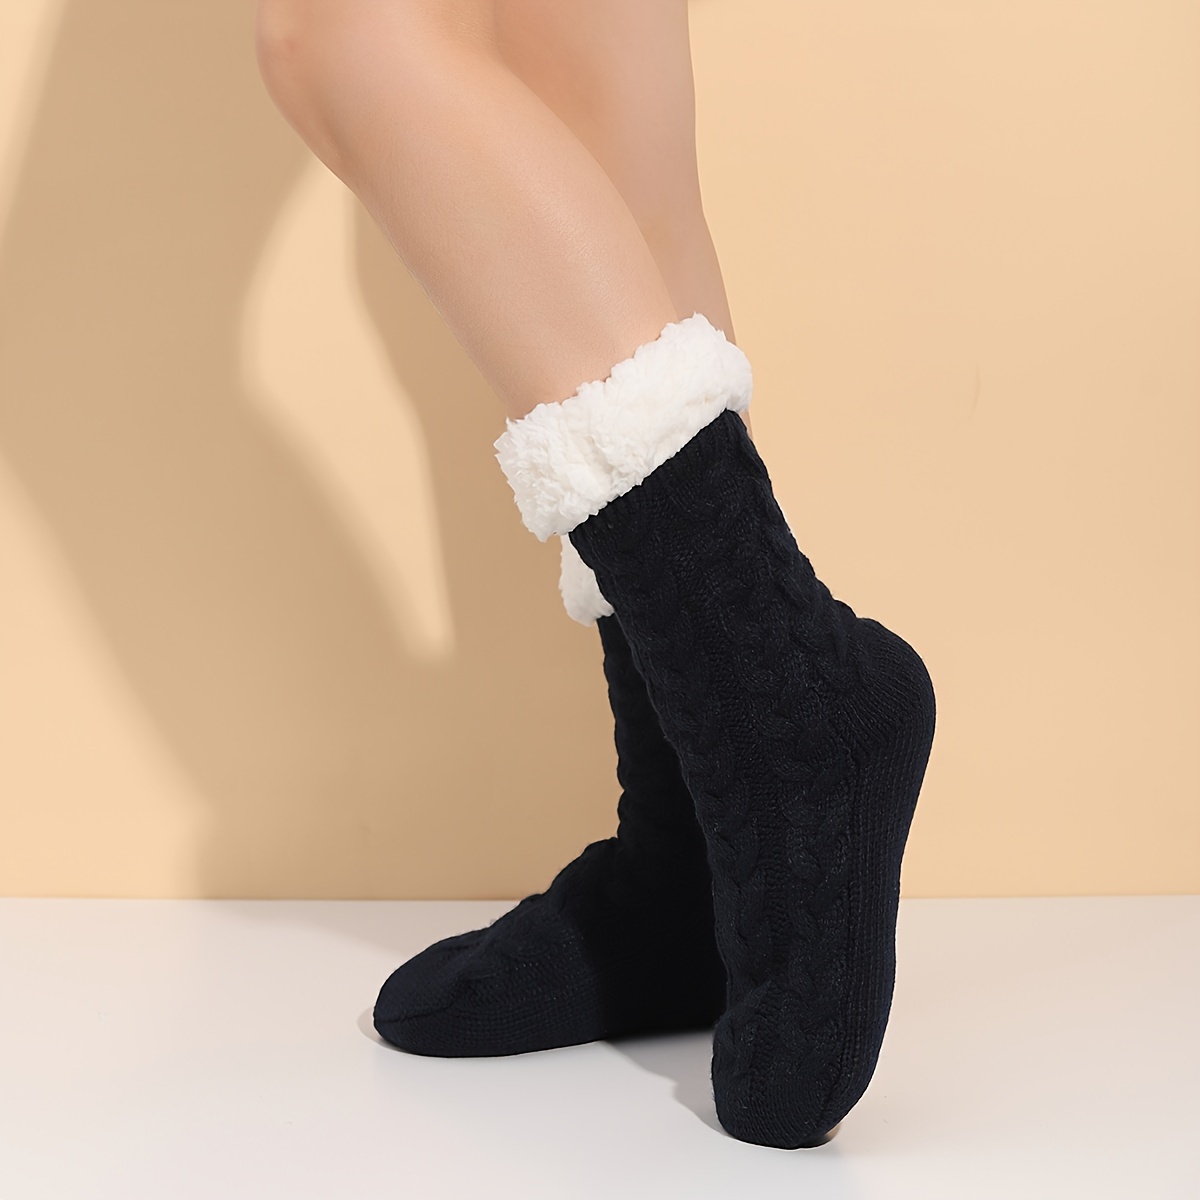 Chaussettes Molletonné Blanche Femme Winter Socks Sherpa